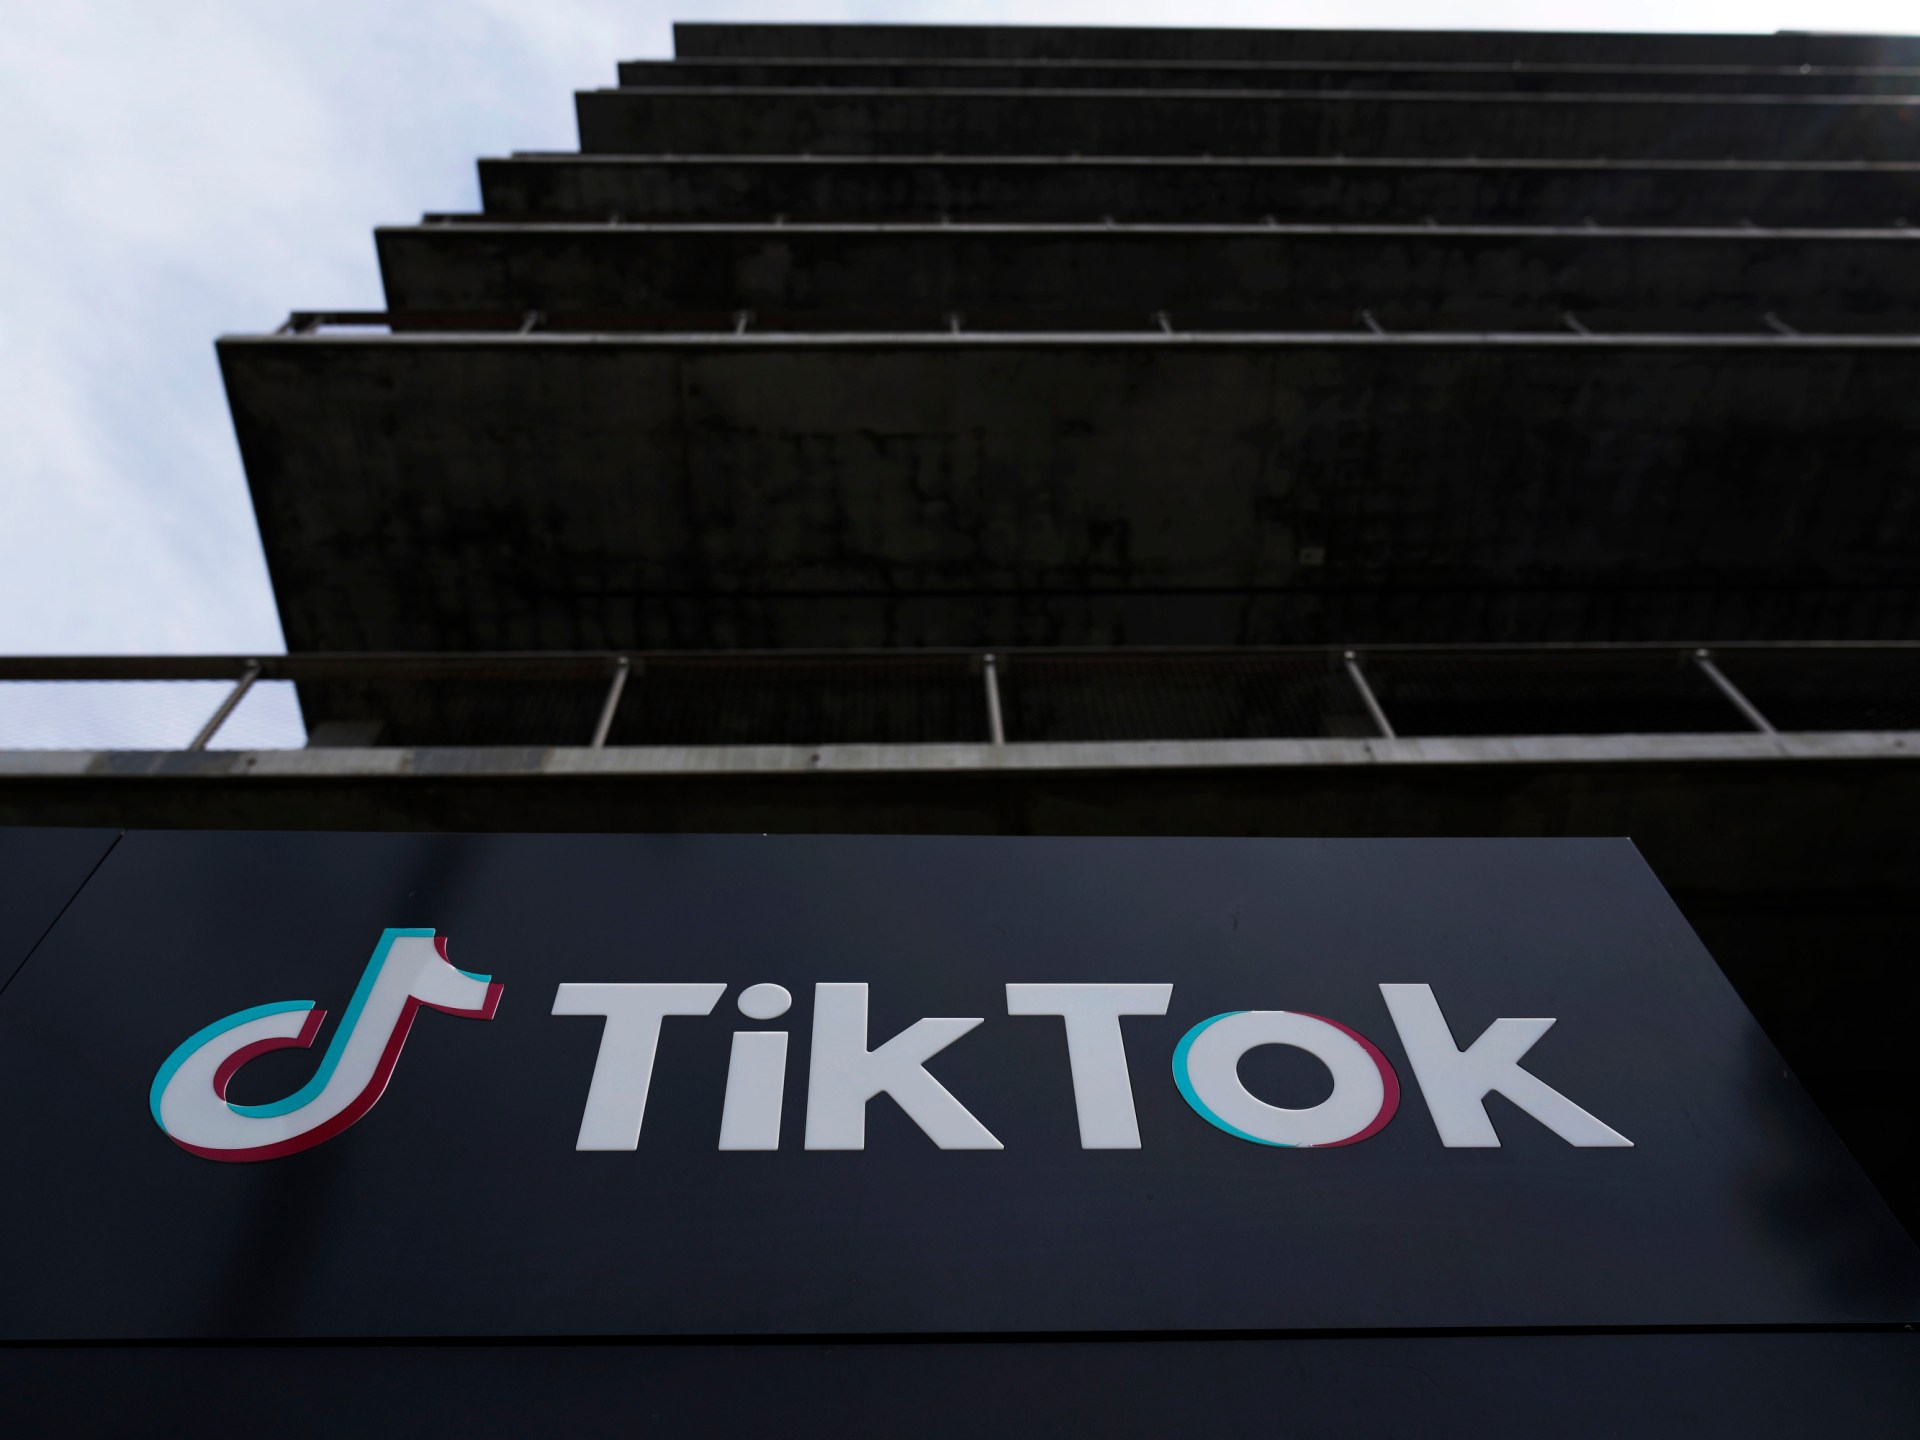 US Senate passes bill to force sale of TikTok, sending it to Biden